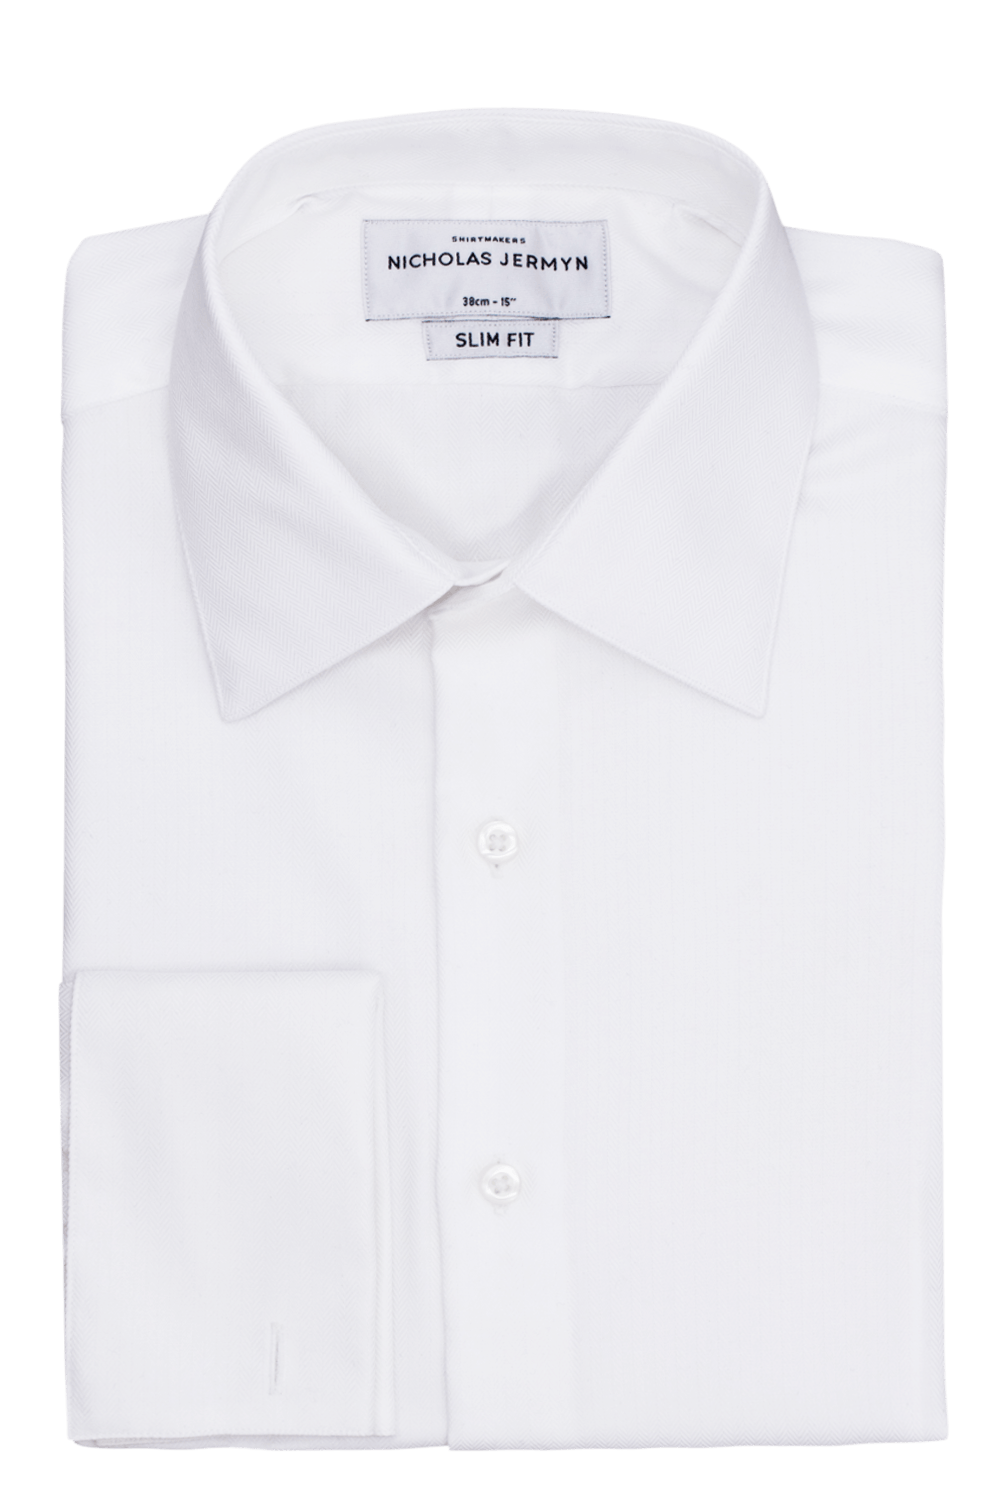 White Dress Shirts for Men | Formal Shirts | Nicholas Jermyn